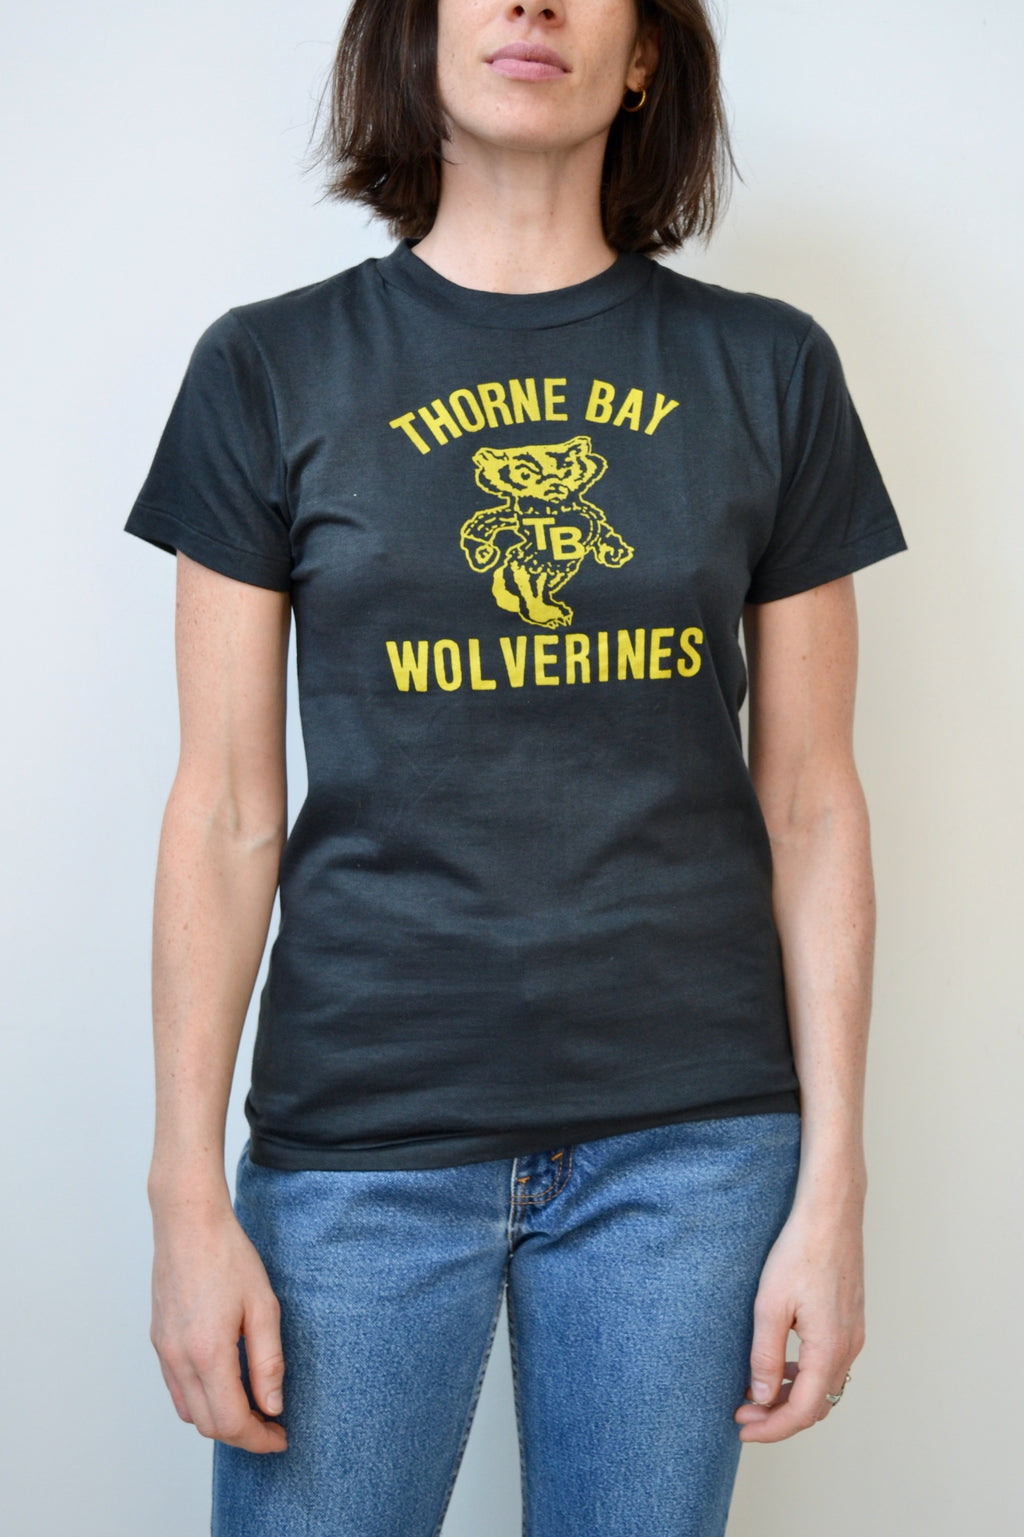 Thorne Bay Wolverines Tee